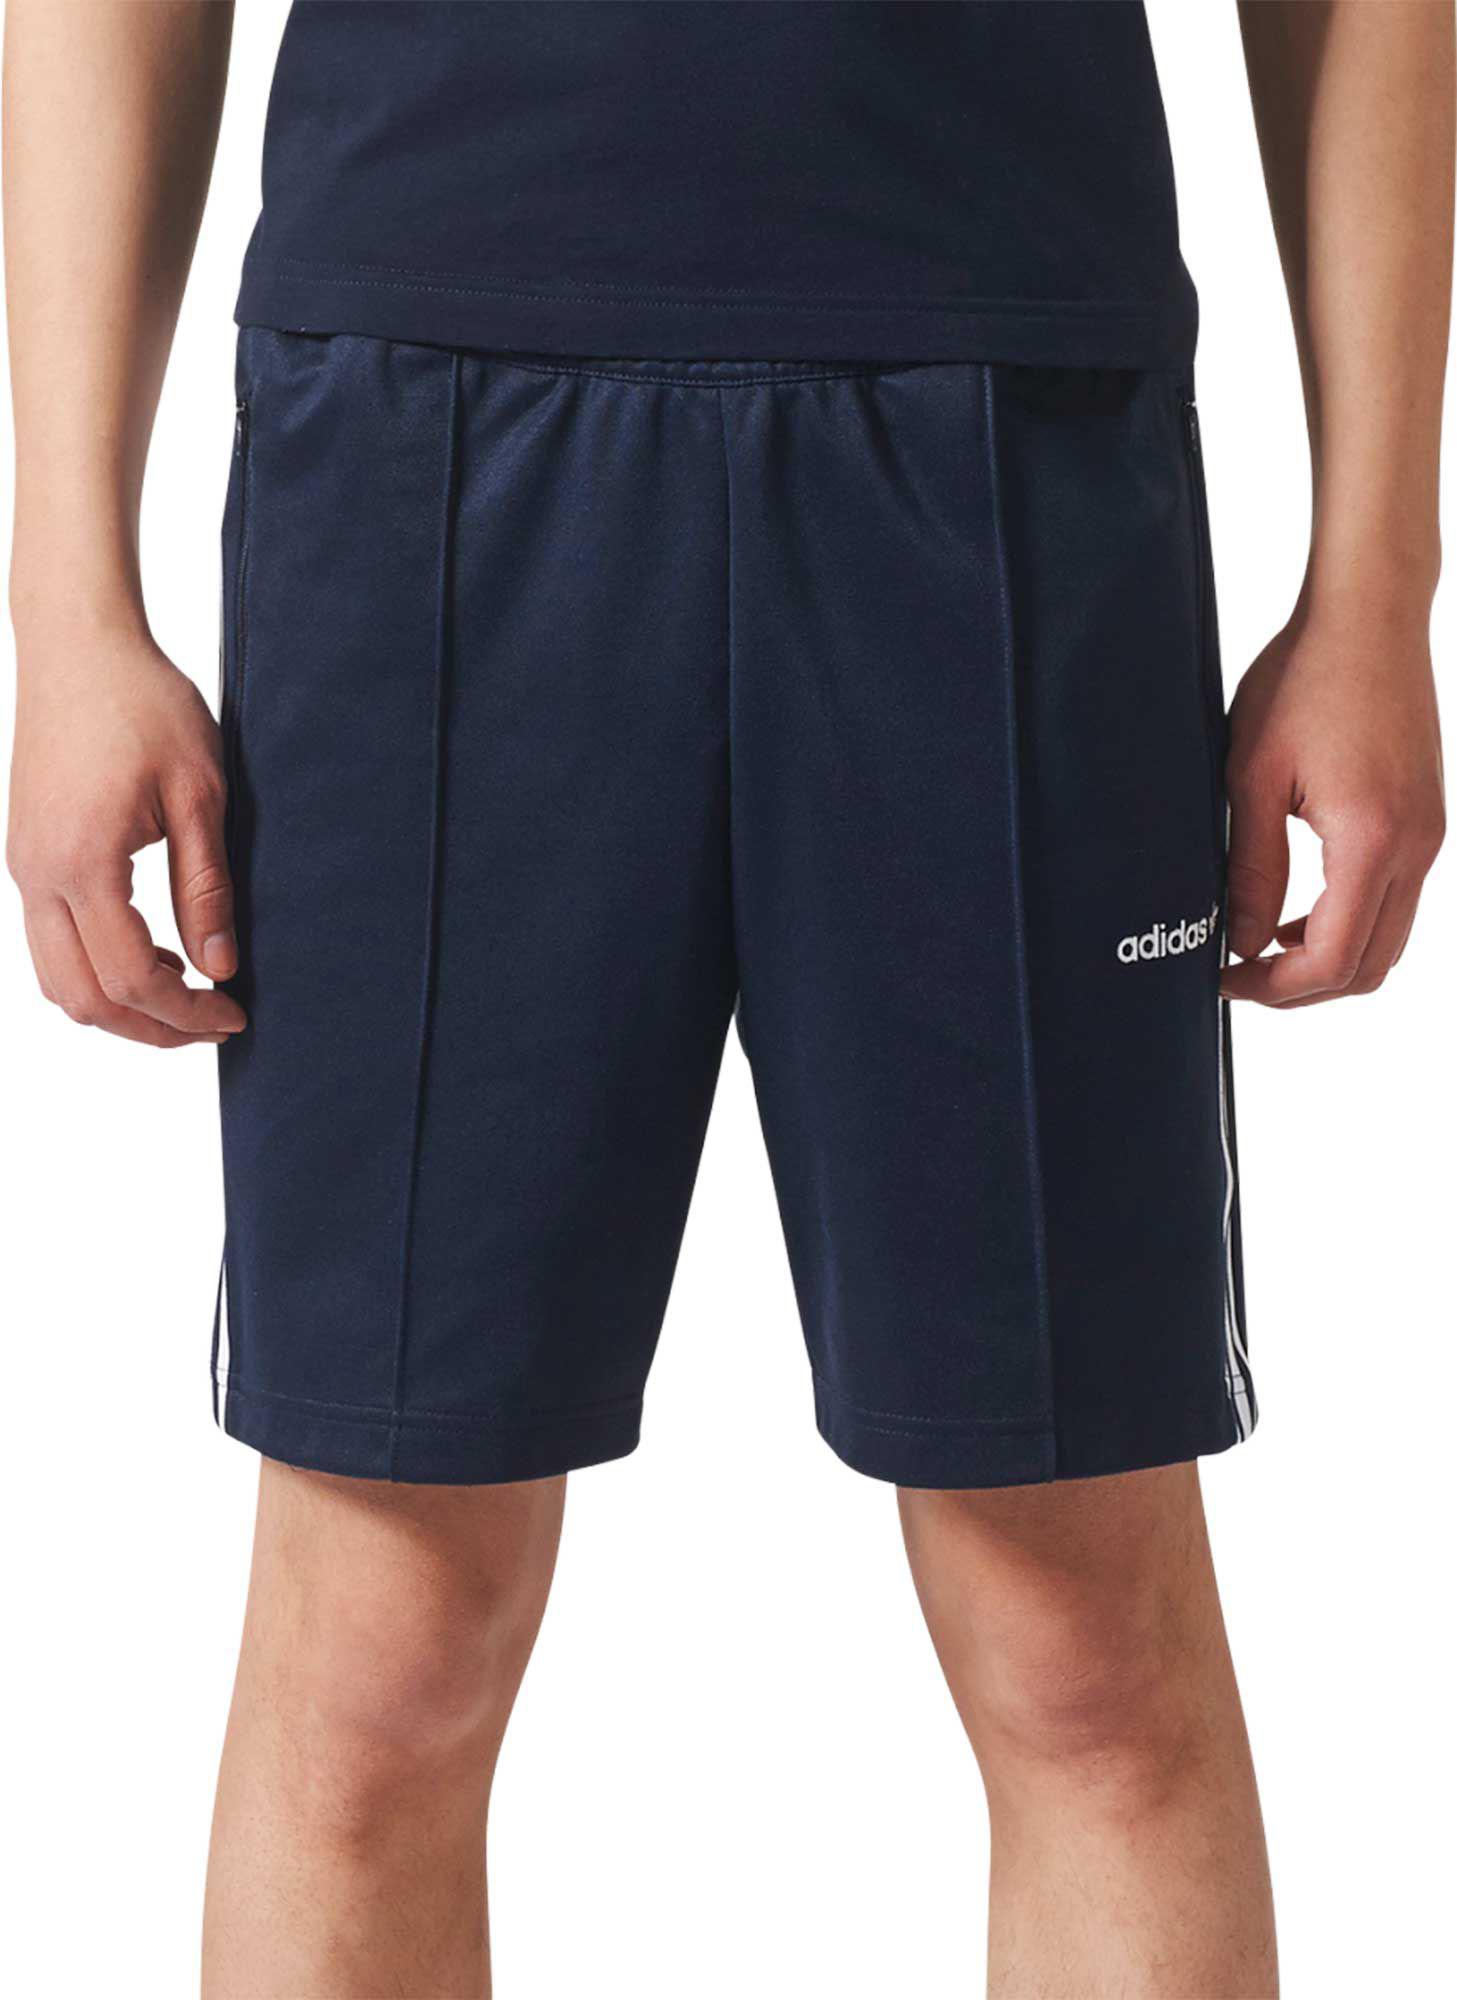 adidas beckenbauer shorts